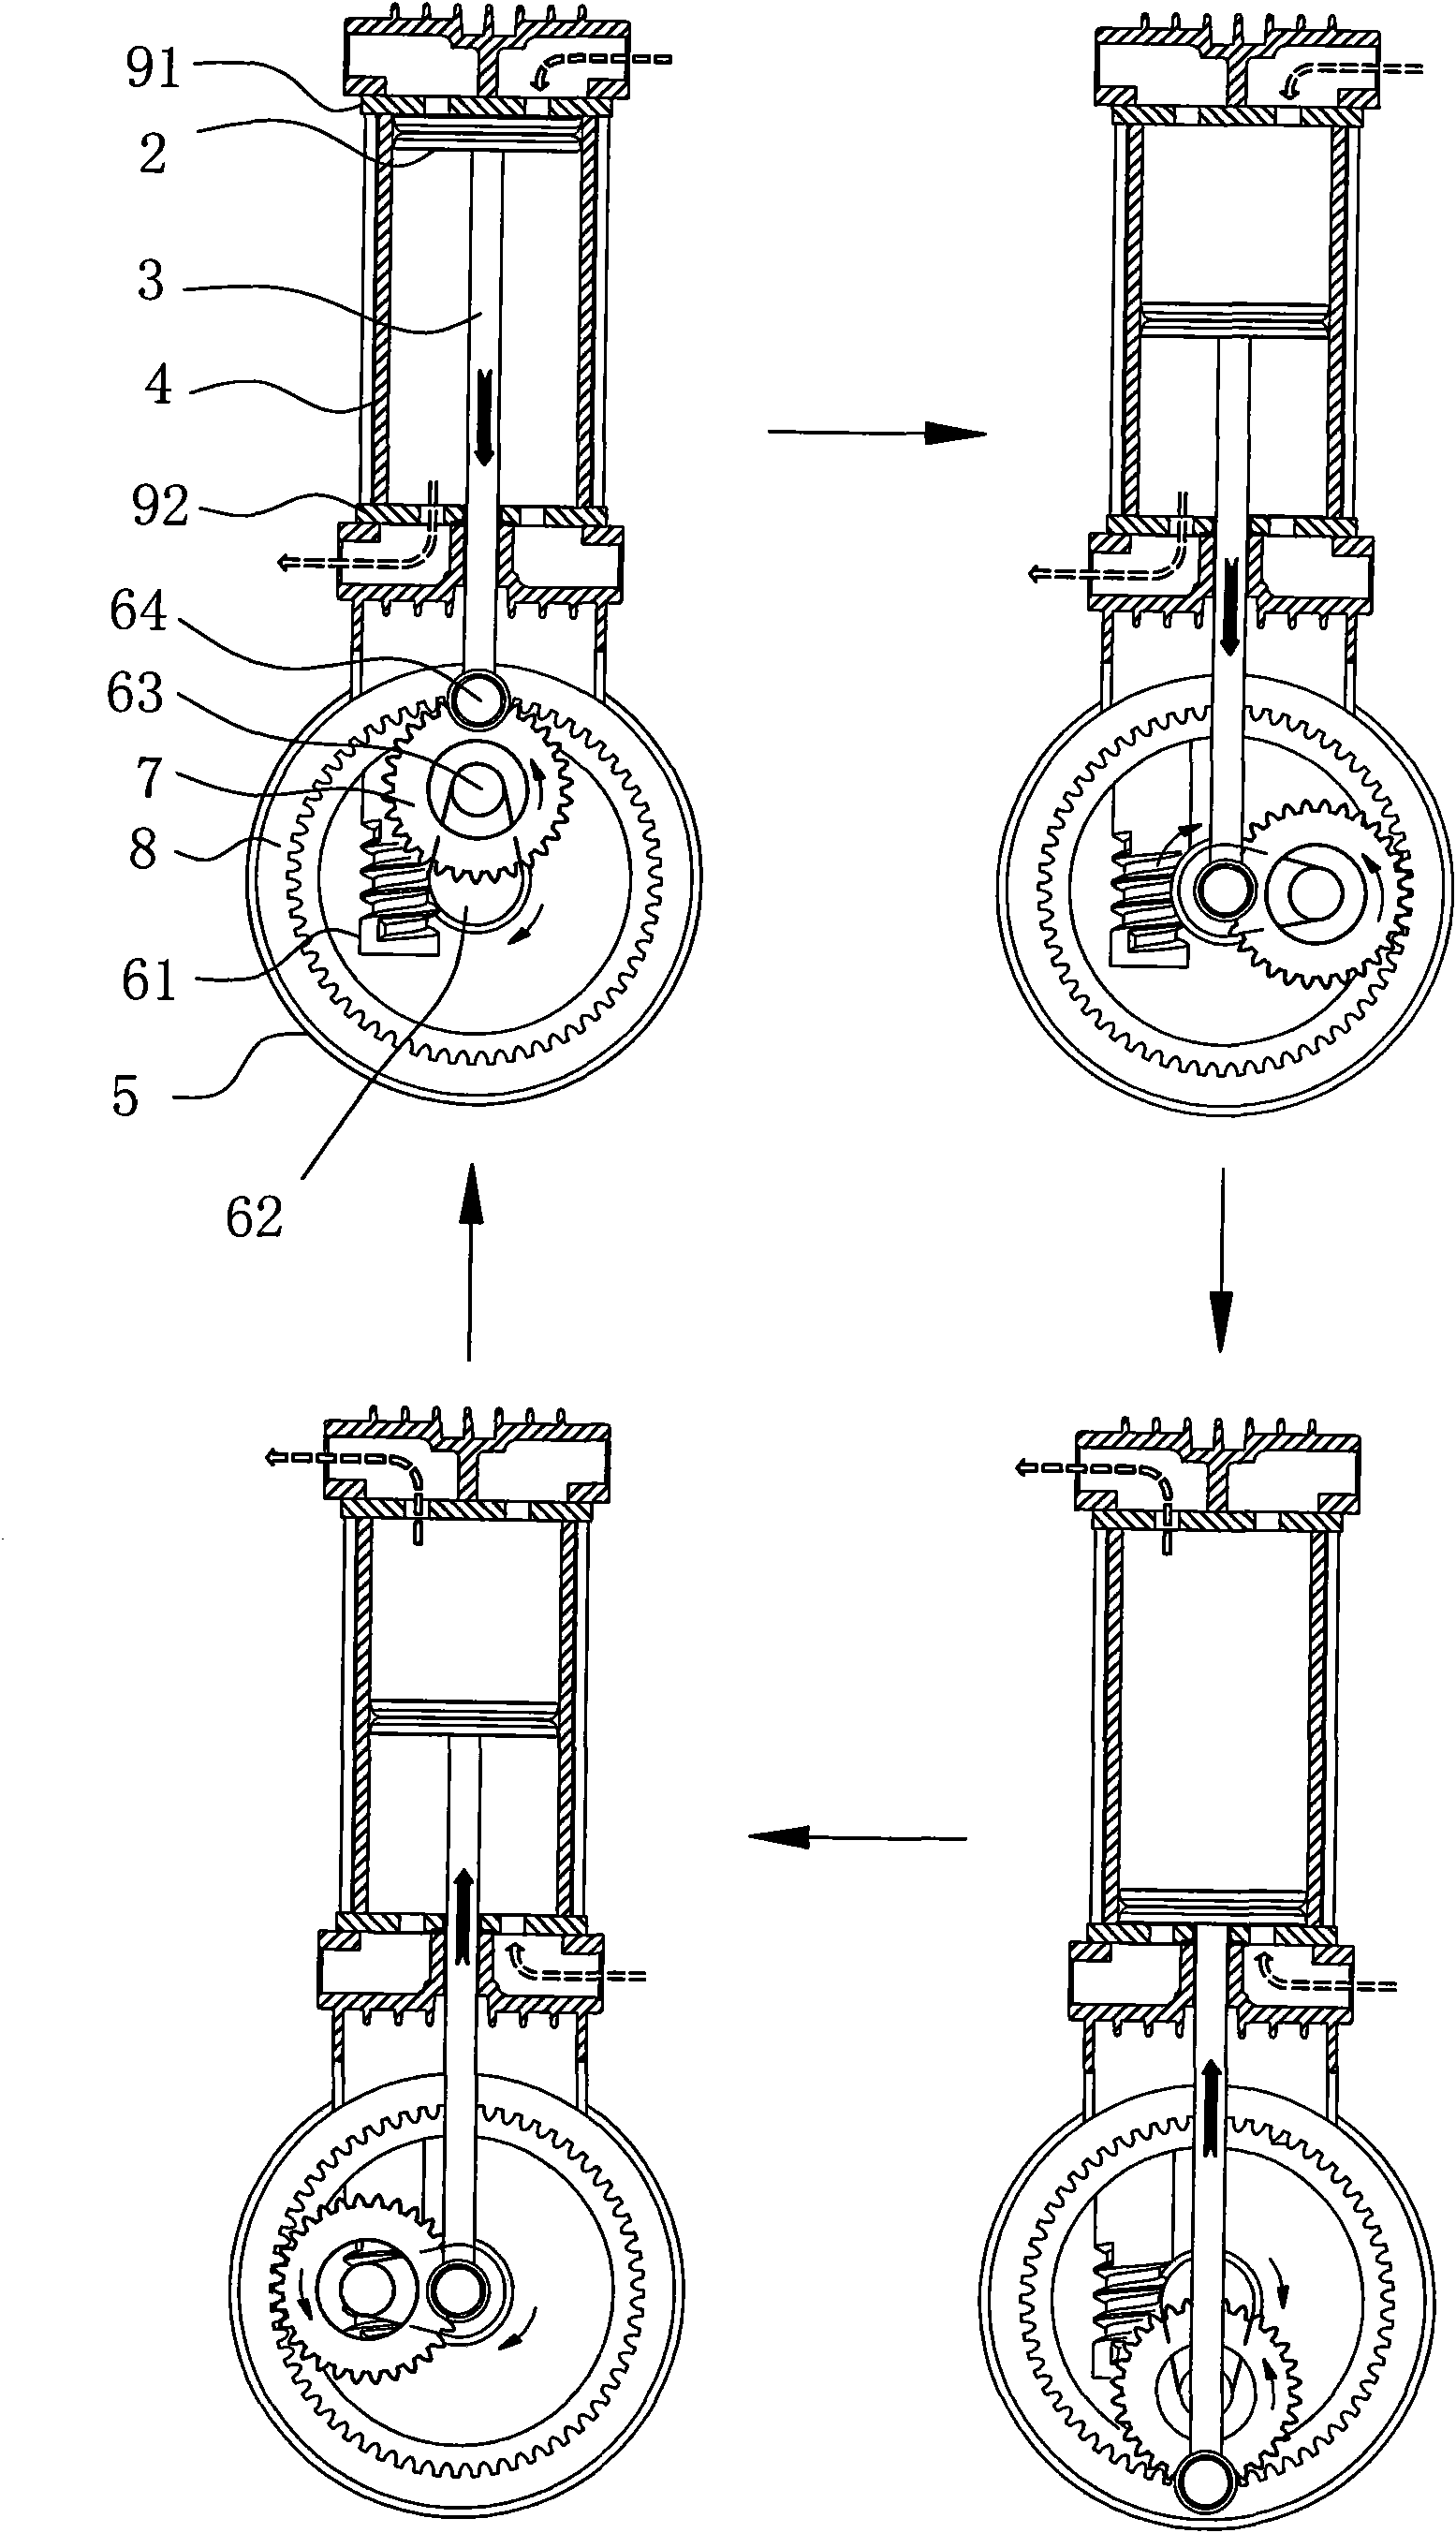 Low-noise reciprocating piston compressor